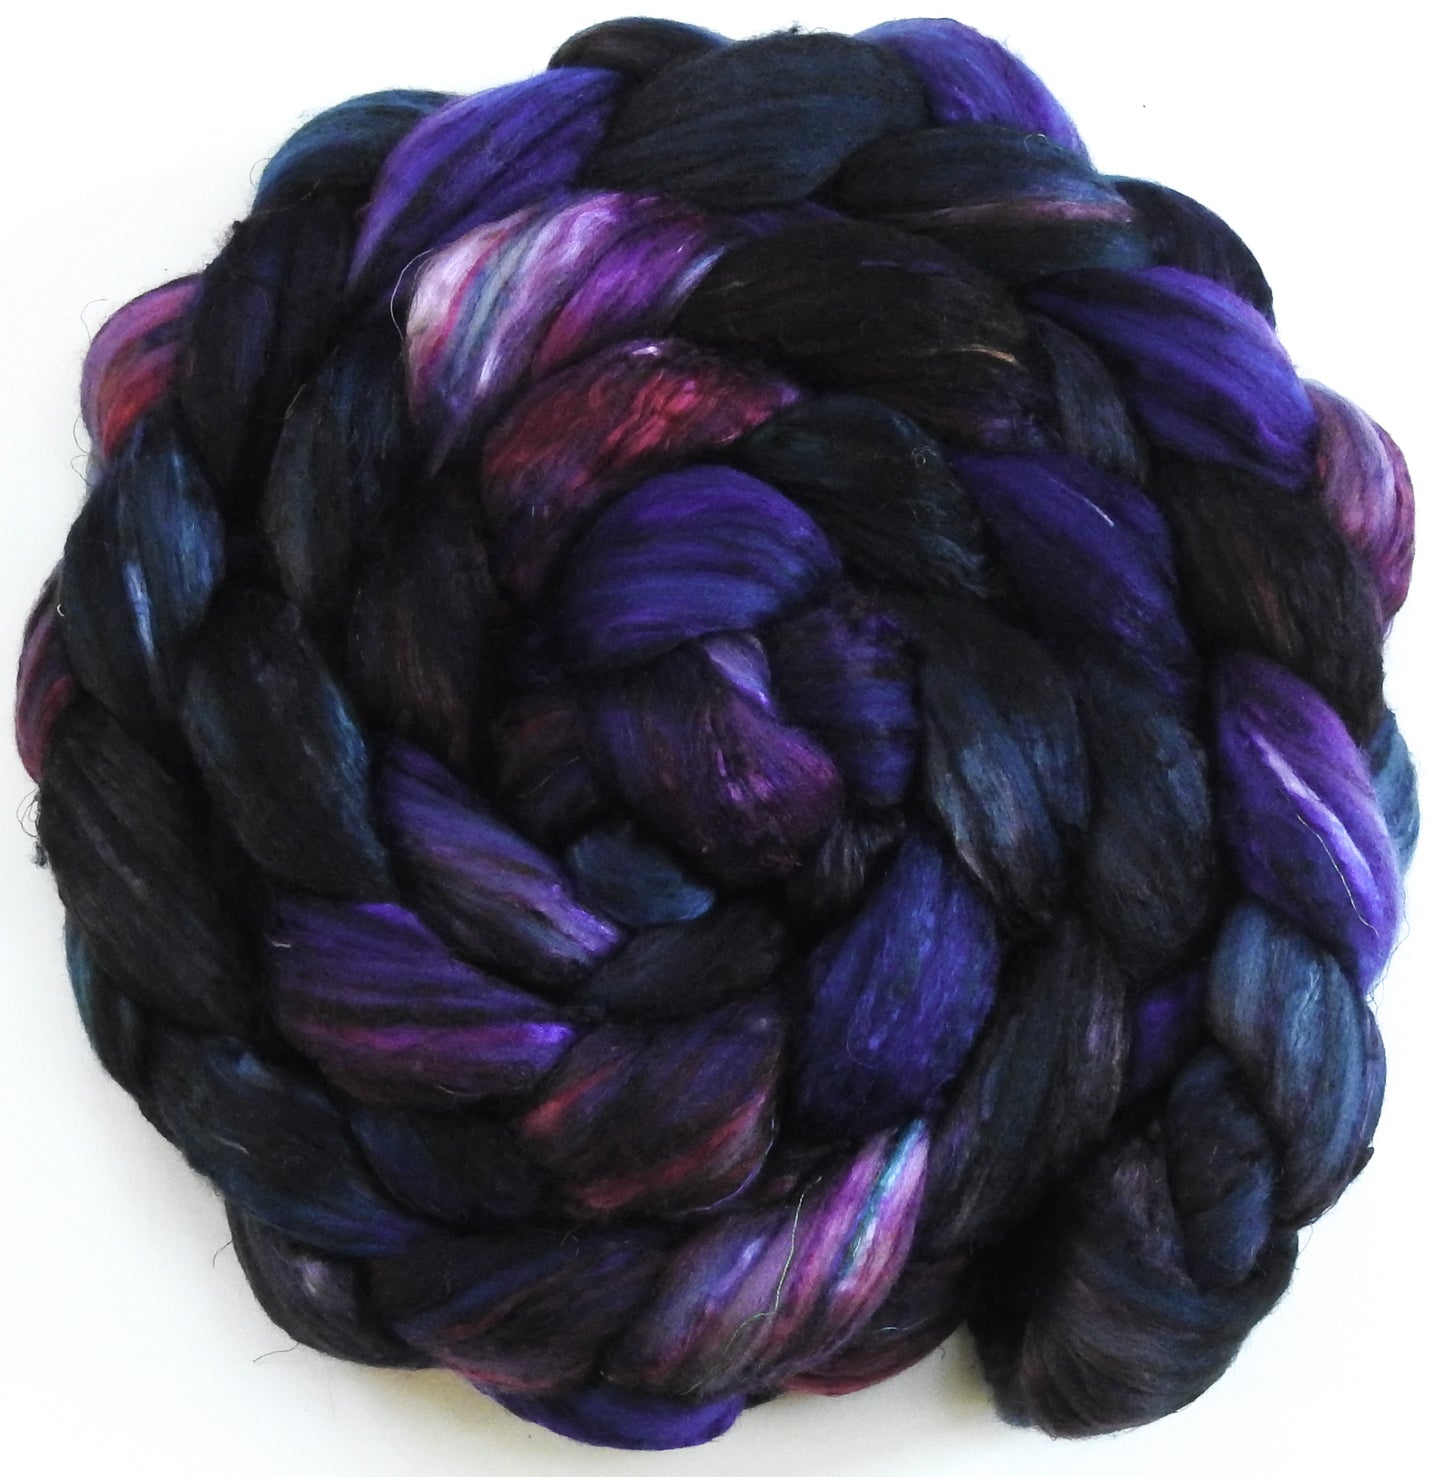 Batt in a Braid #39 - Singular 33 -(5.8 oz.) Falkland Merino/ Mulberry Silk / Sari Silk (50/25/25)